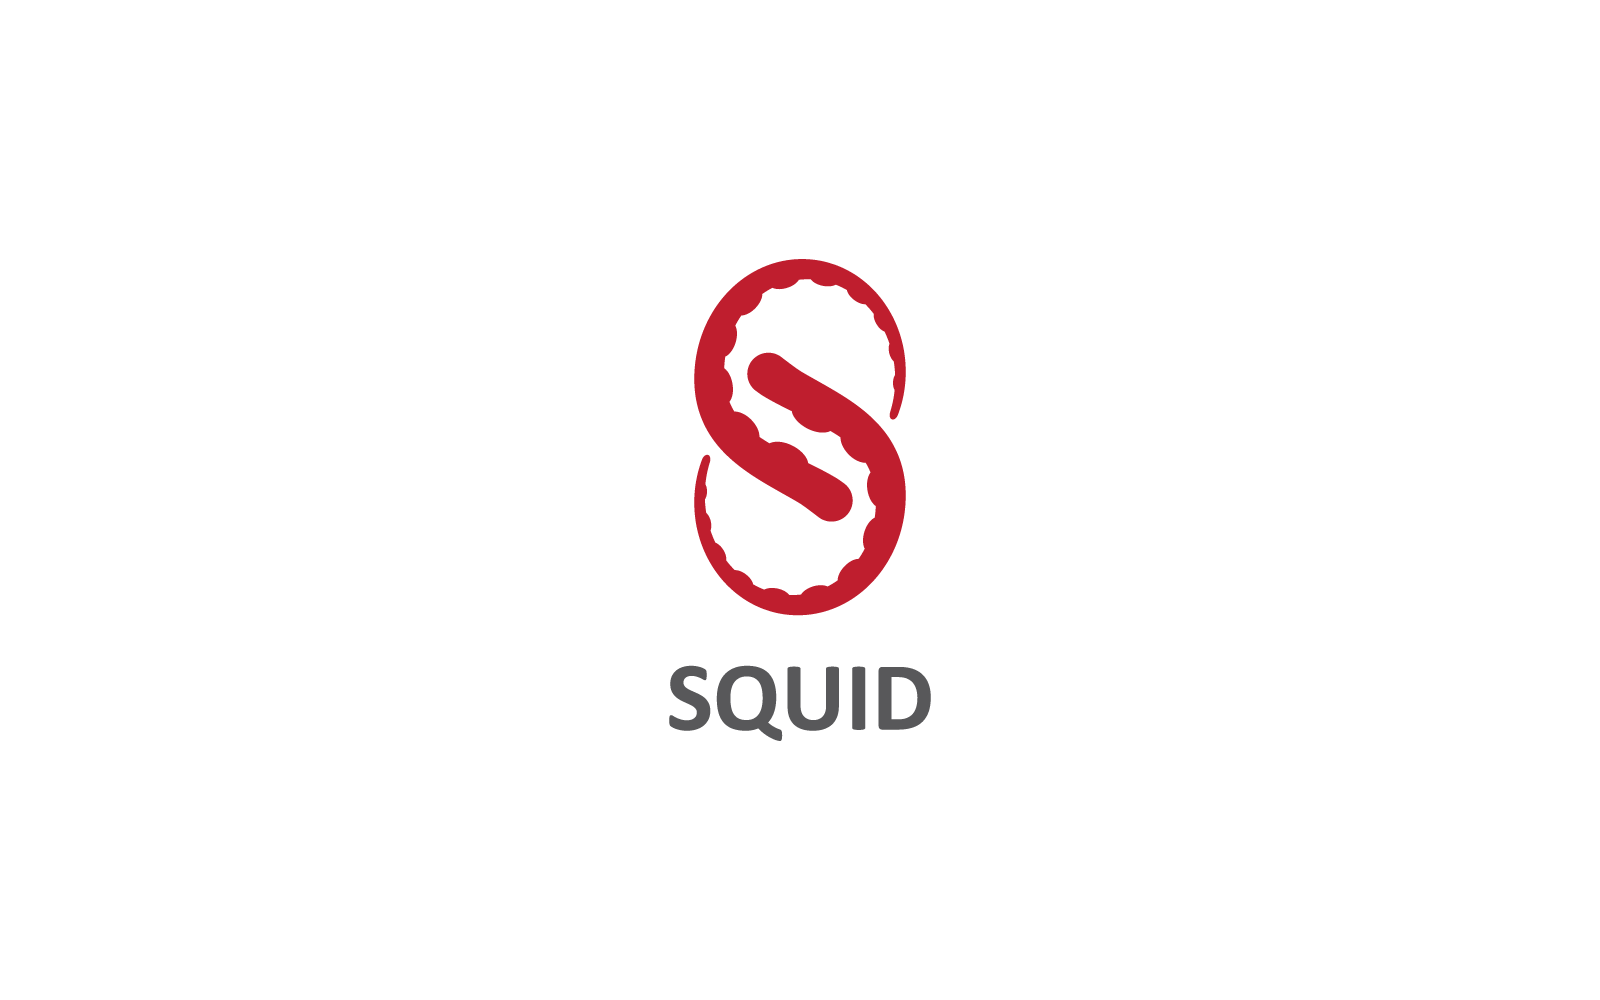 Squid fish illustration logo icon vector design Logo Template